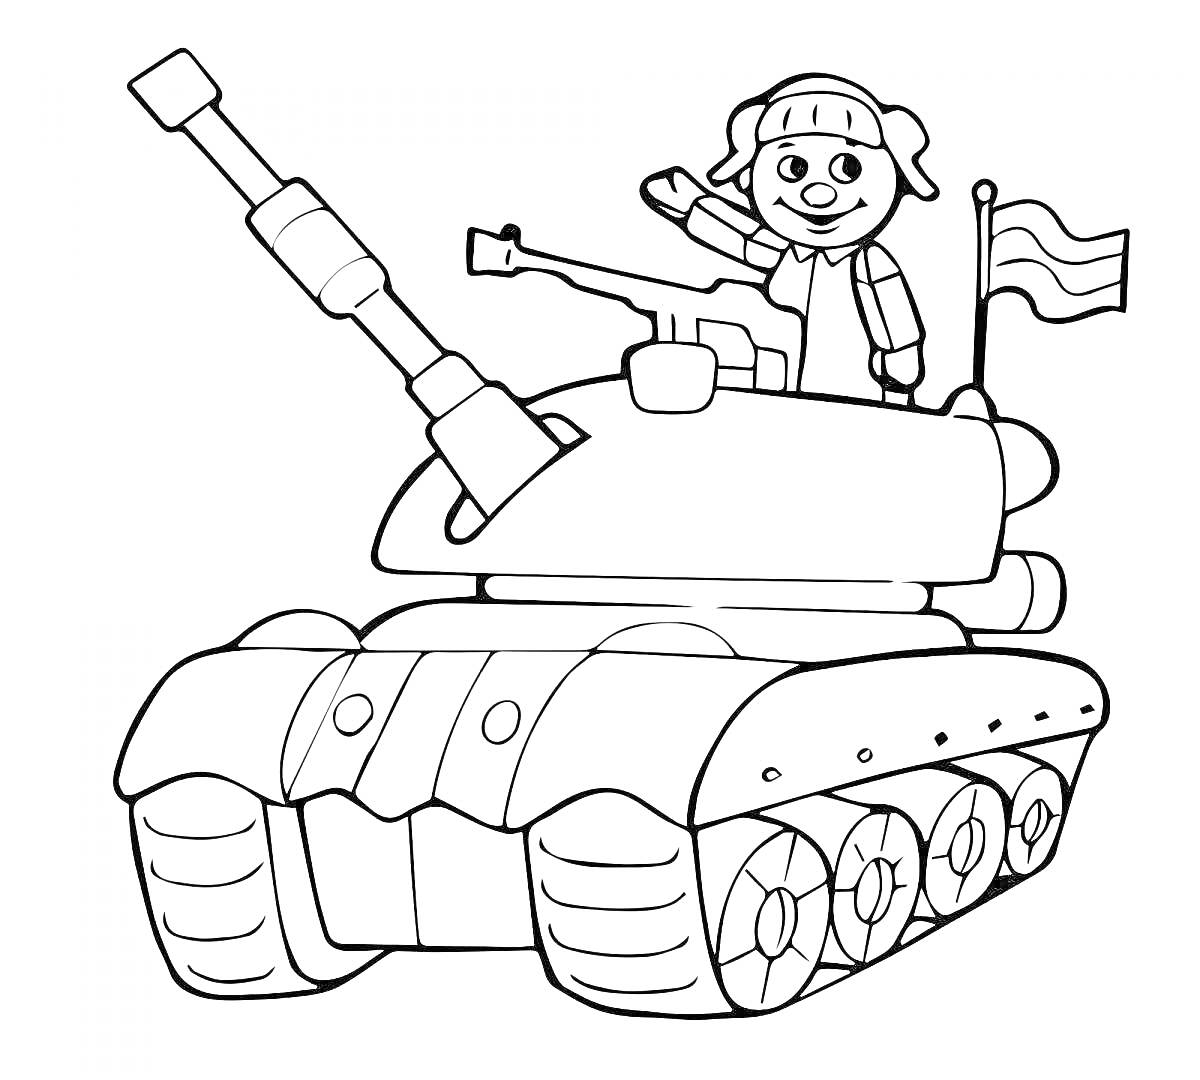 Раскраска Собака в шлеме на танке с пушкой и флагом